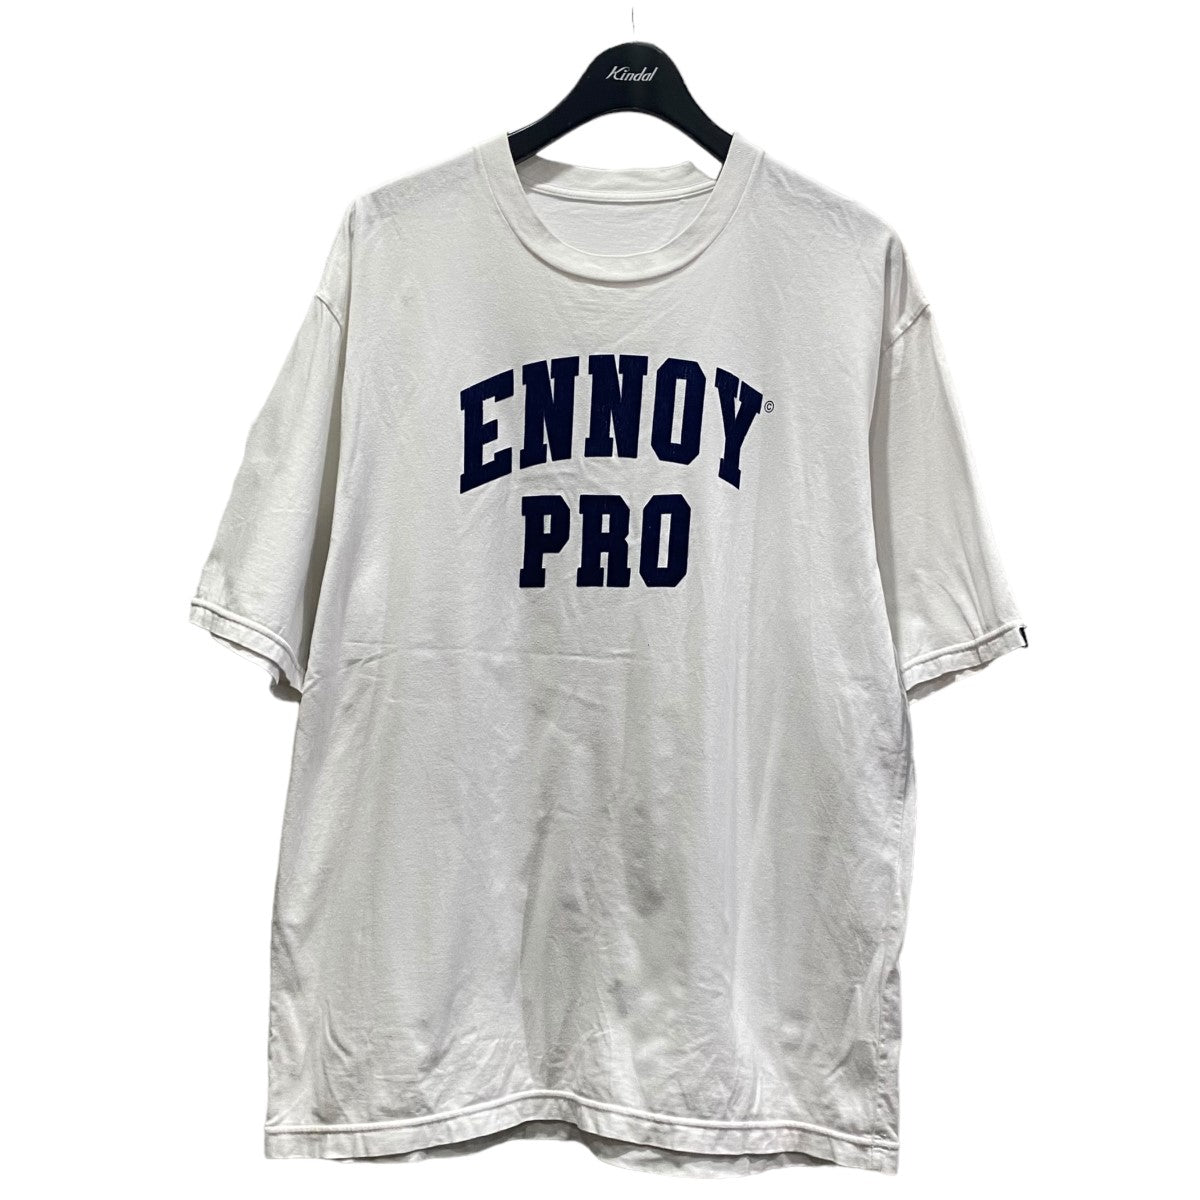 ENNOY(エンノイ) ロゴTシャツ SS20BRENNCT01AM SS20BRENNCT01AM 